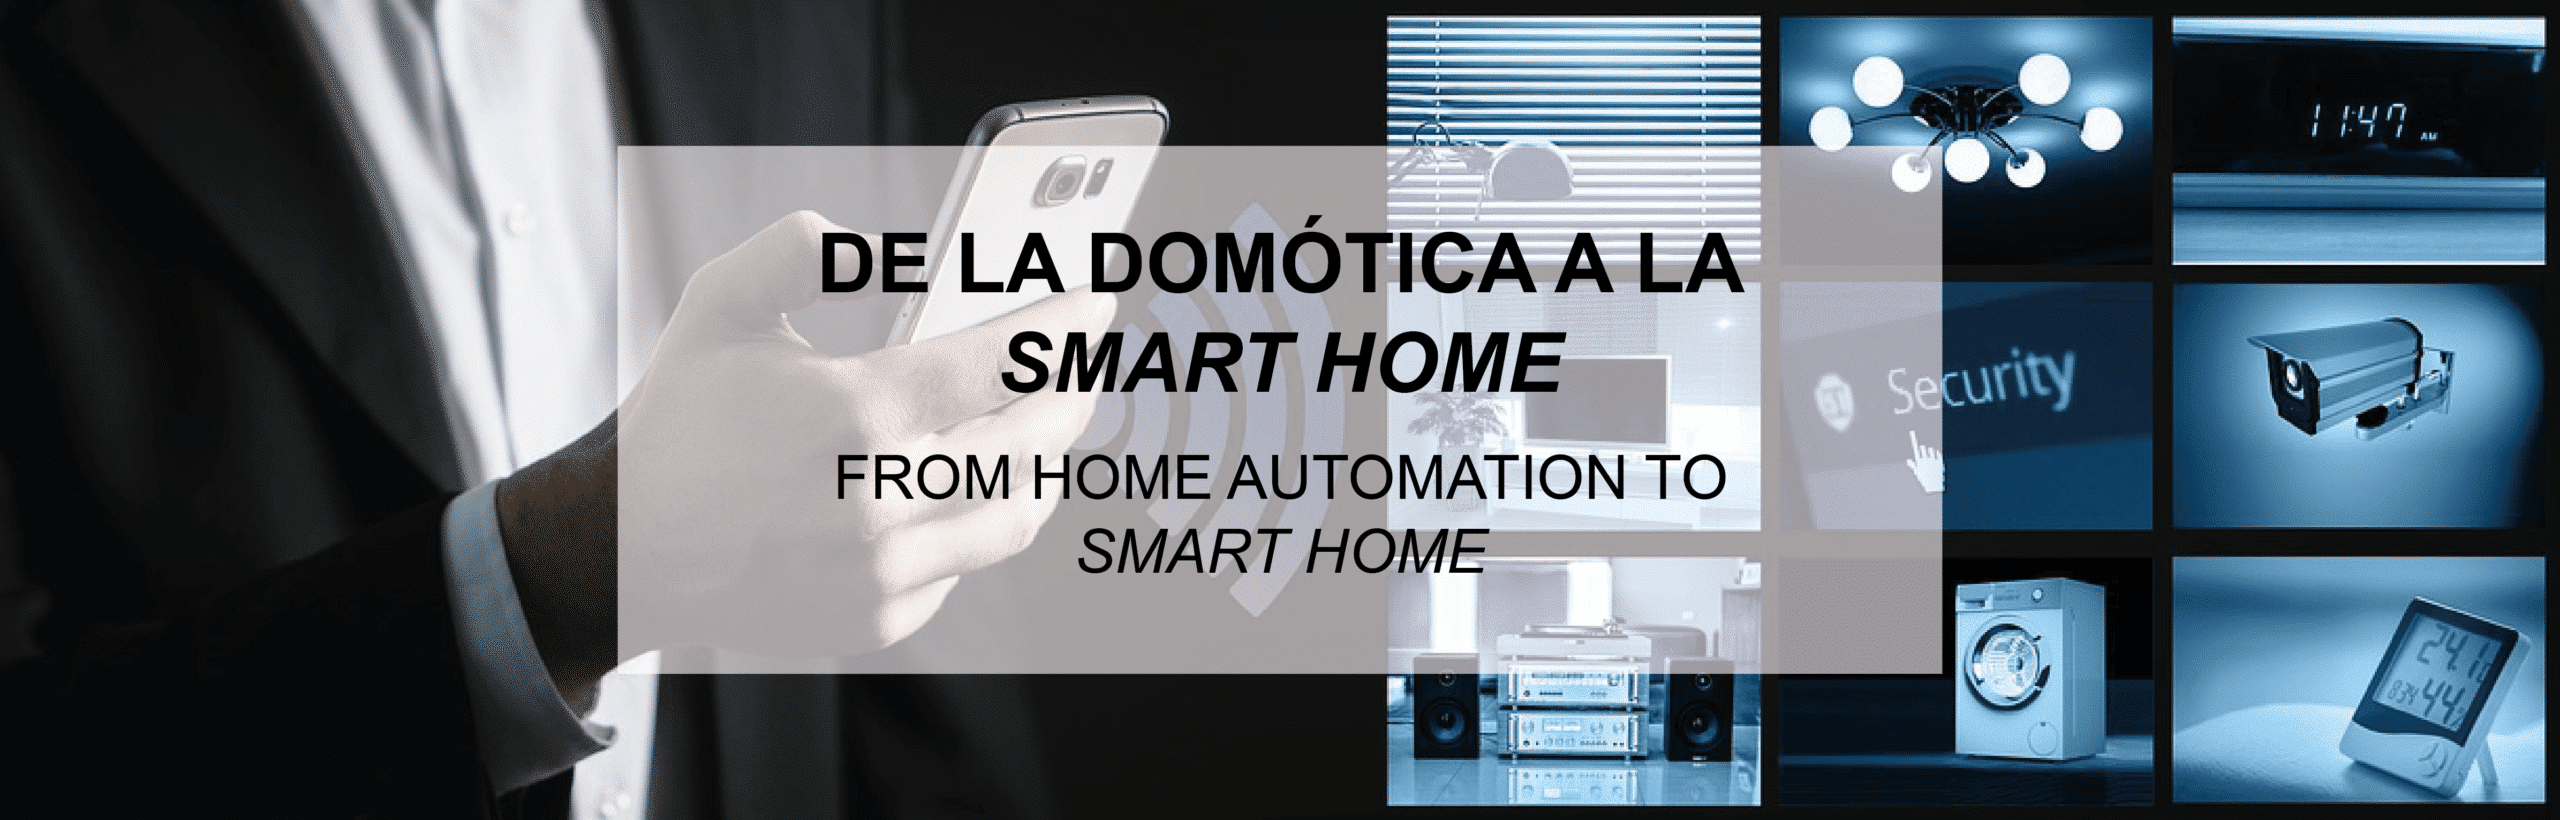 De la domótica a la Smart Home